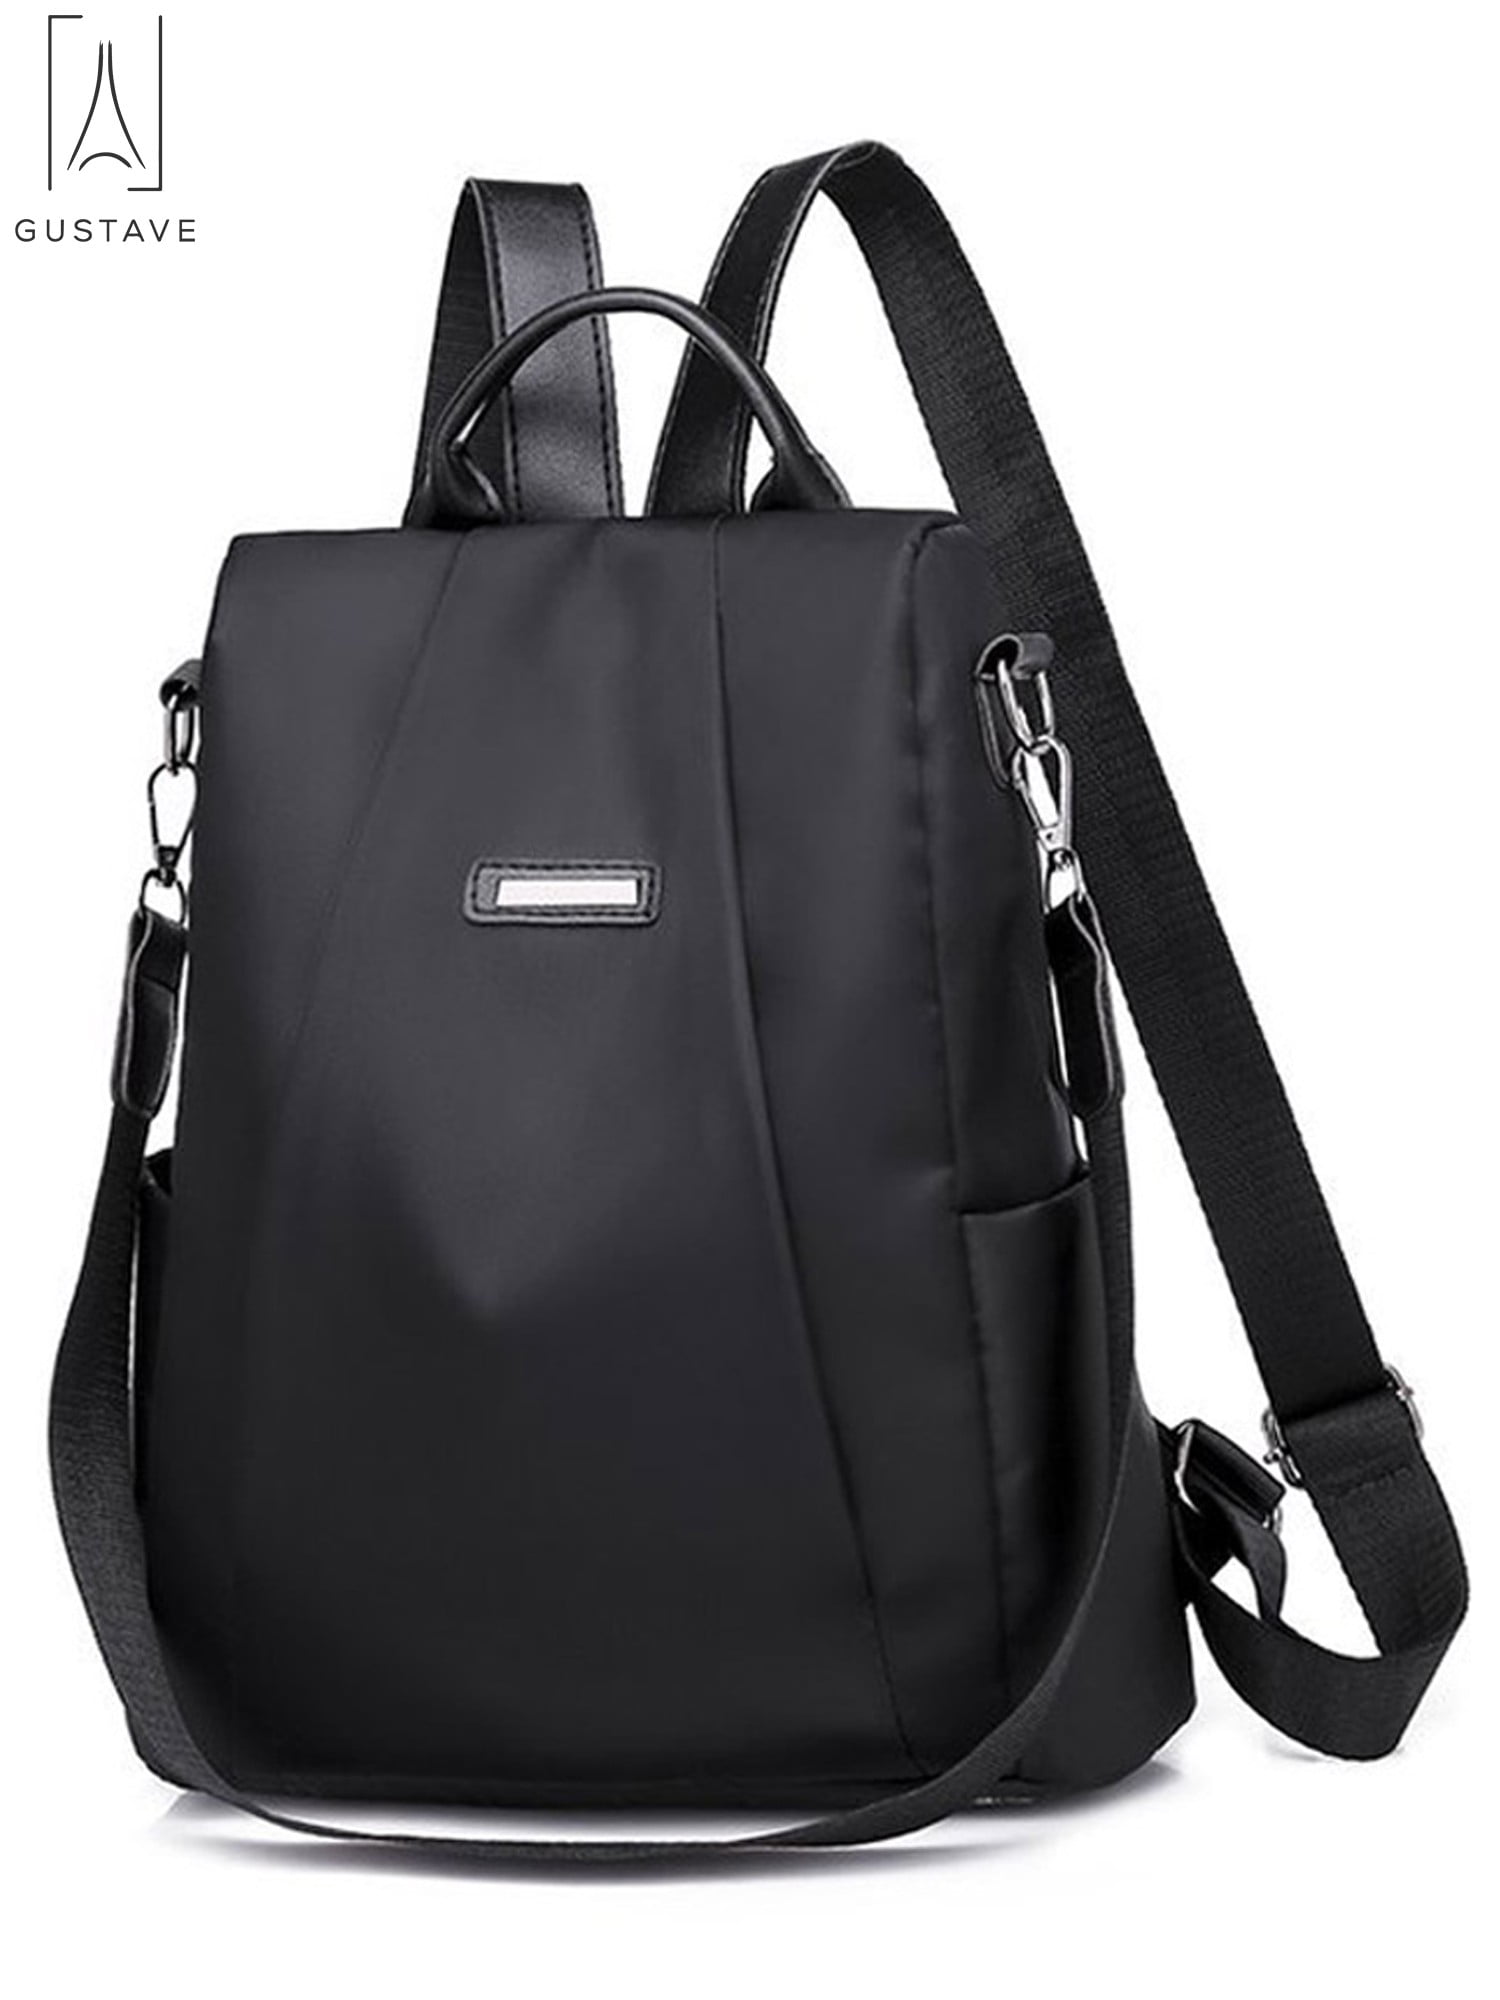 New Women Backpack Anti-Theft Rucksack Waterproof Oxford Cloth School Bag Travel